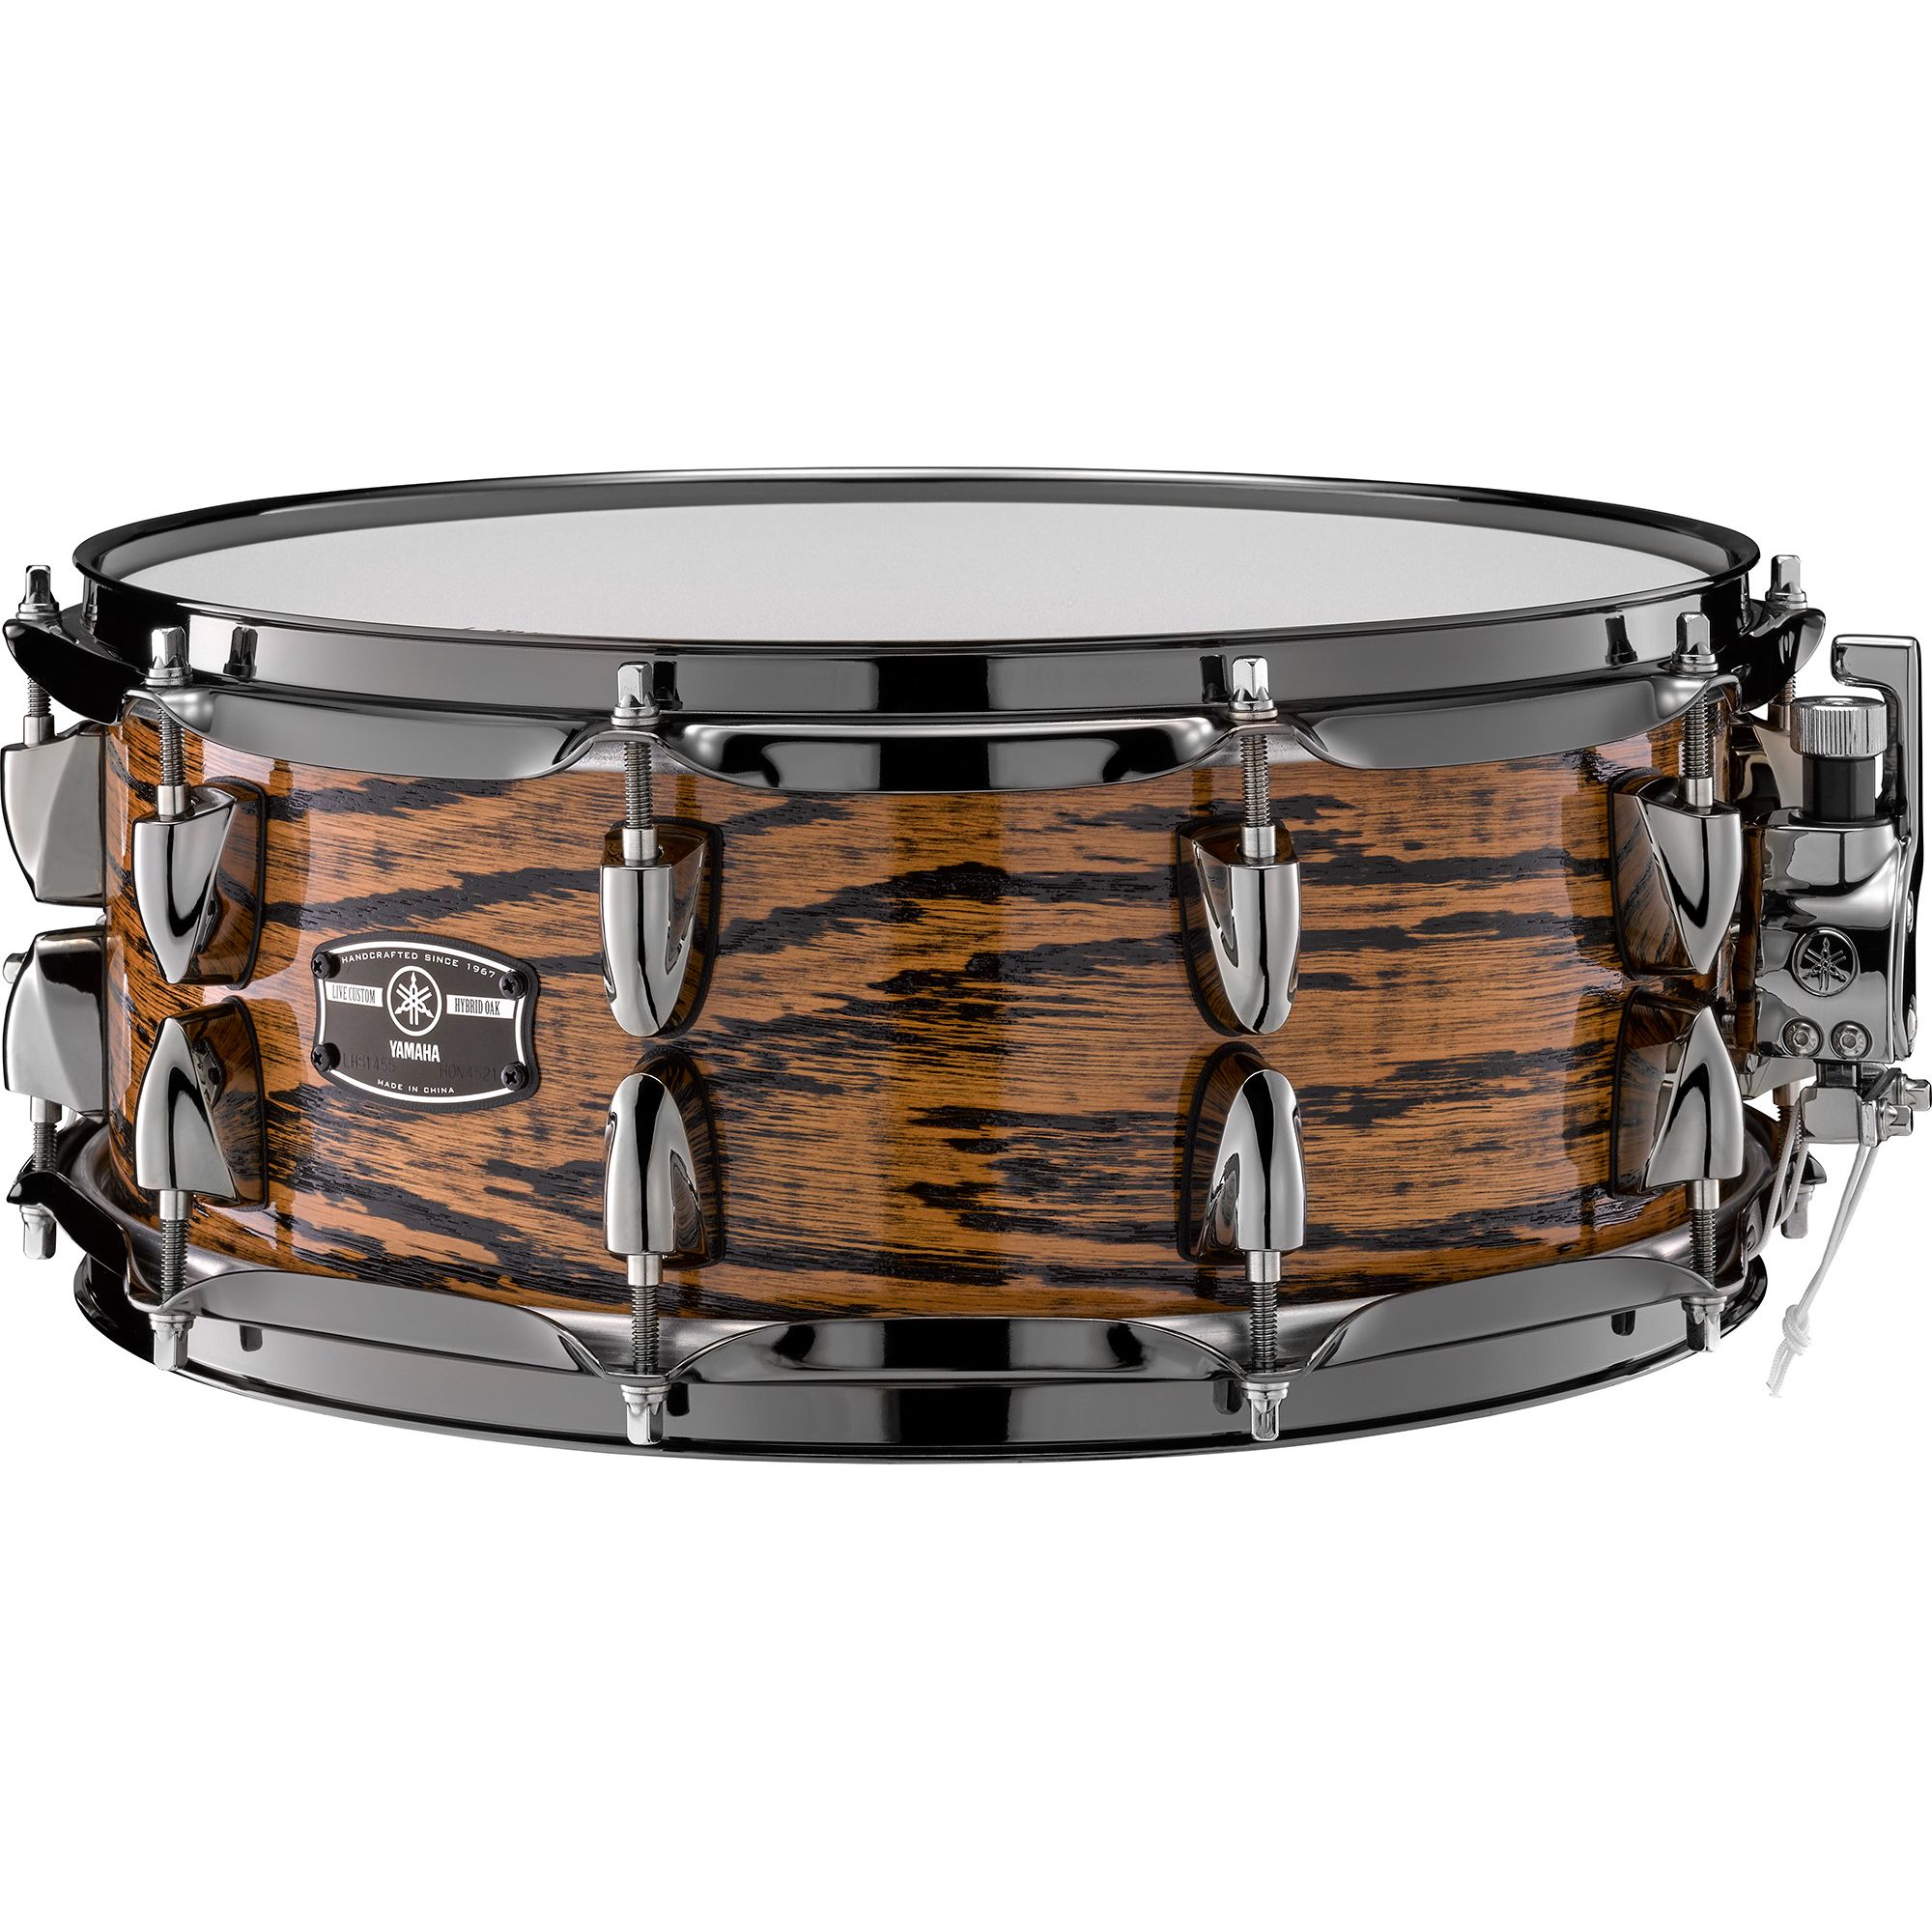 Live Custom Hybrid Oak - Overview - Snare Drums - Acoustic Drums 